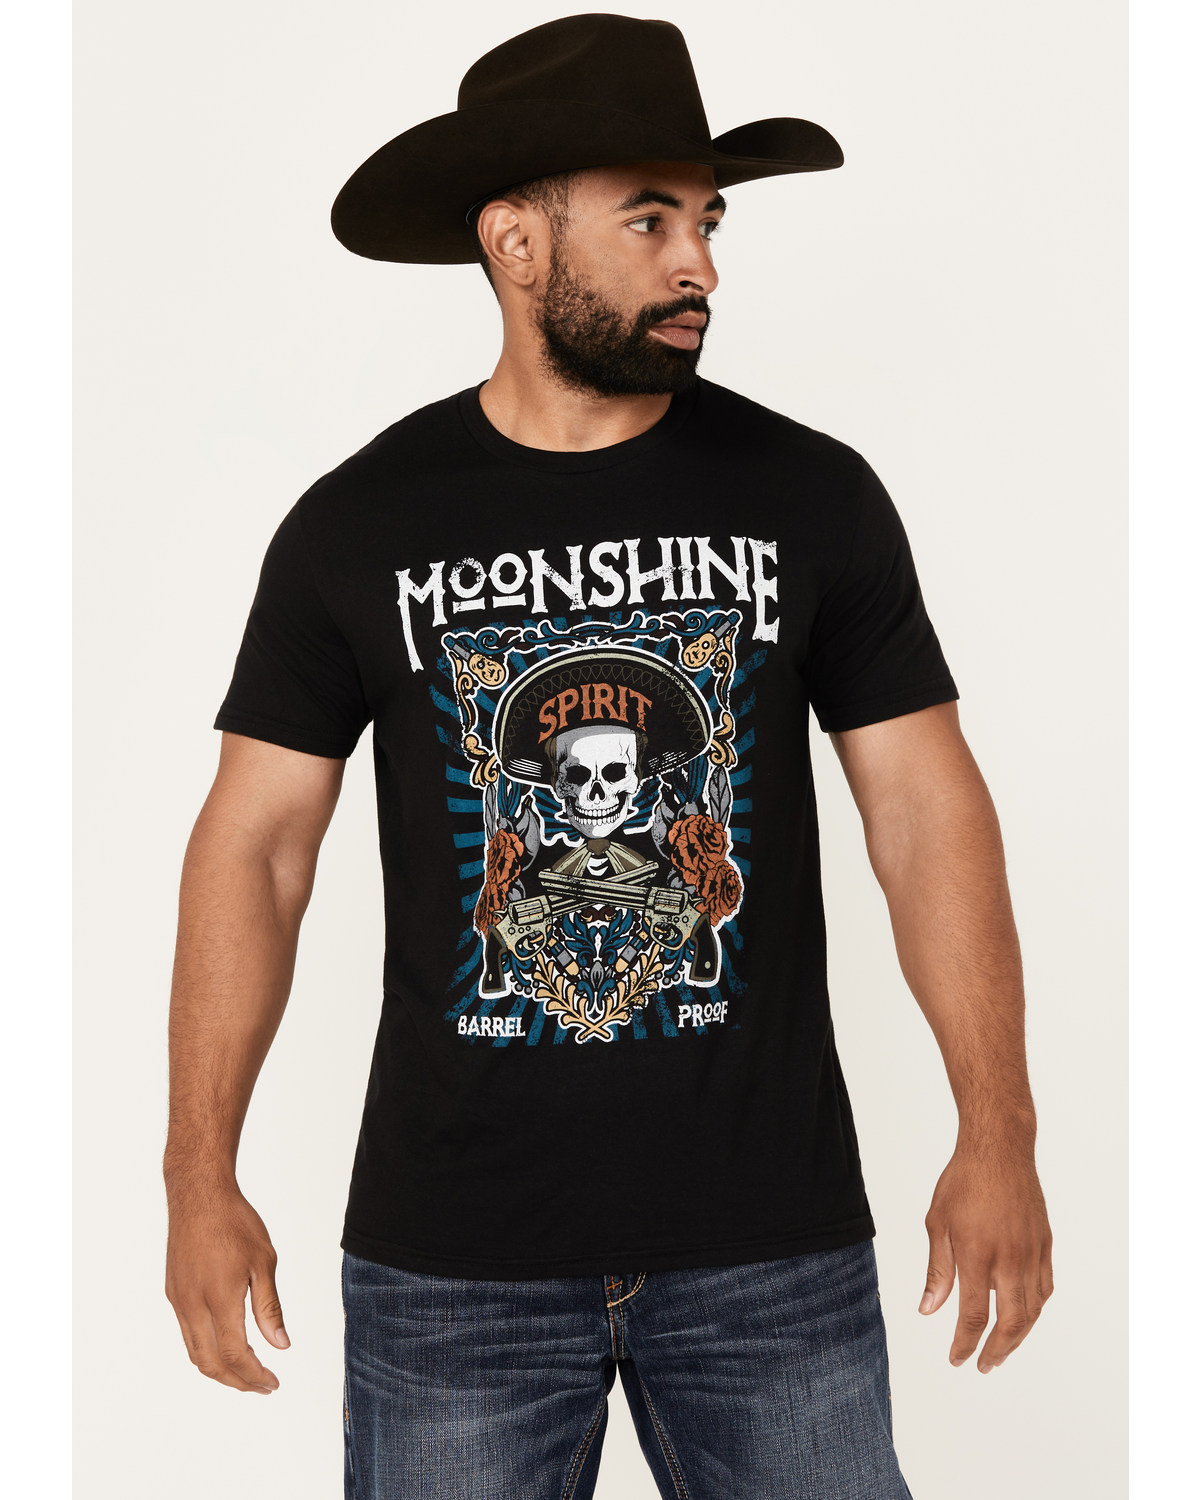 Moonshine Spirit Men's Barrel Short Sleeve Graphic T-Shirt